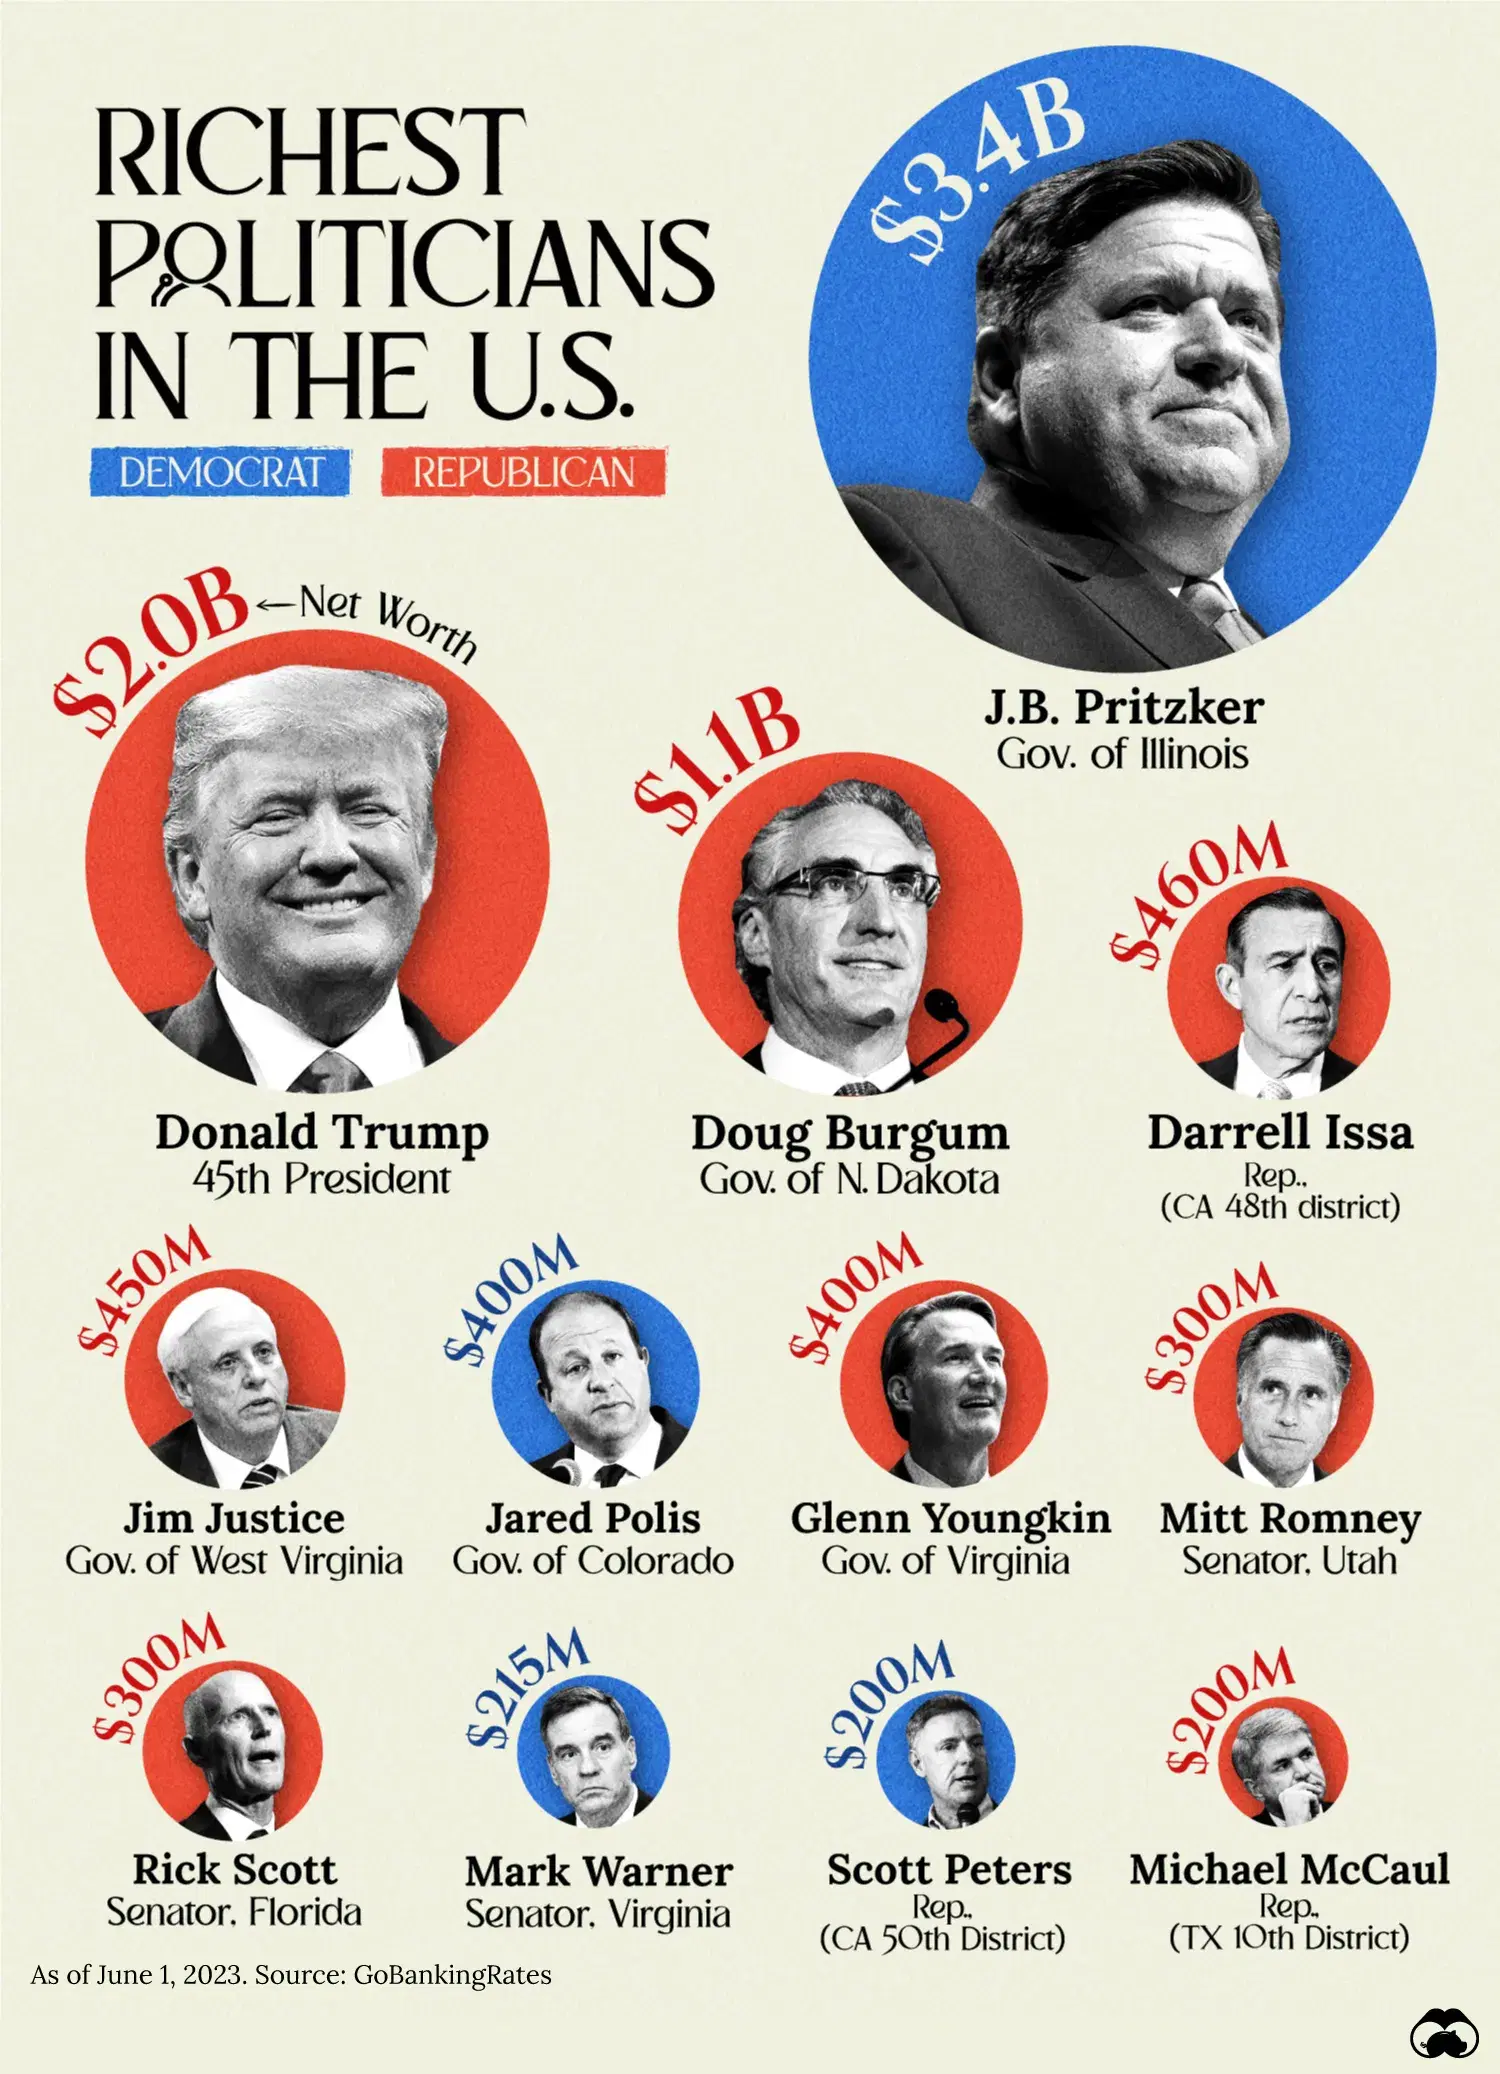 Ranking America’s Richest Politicians